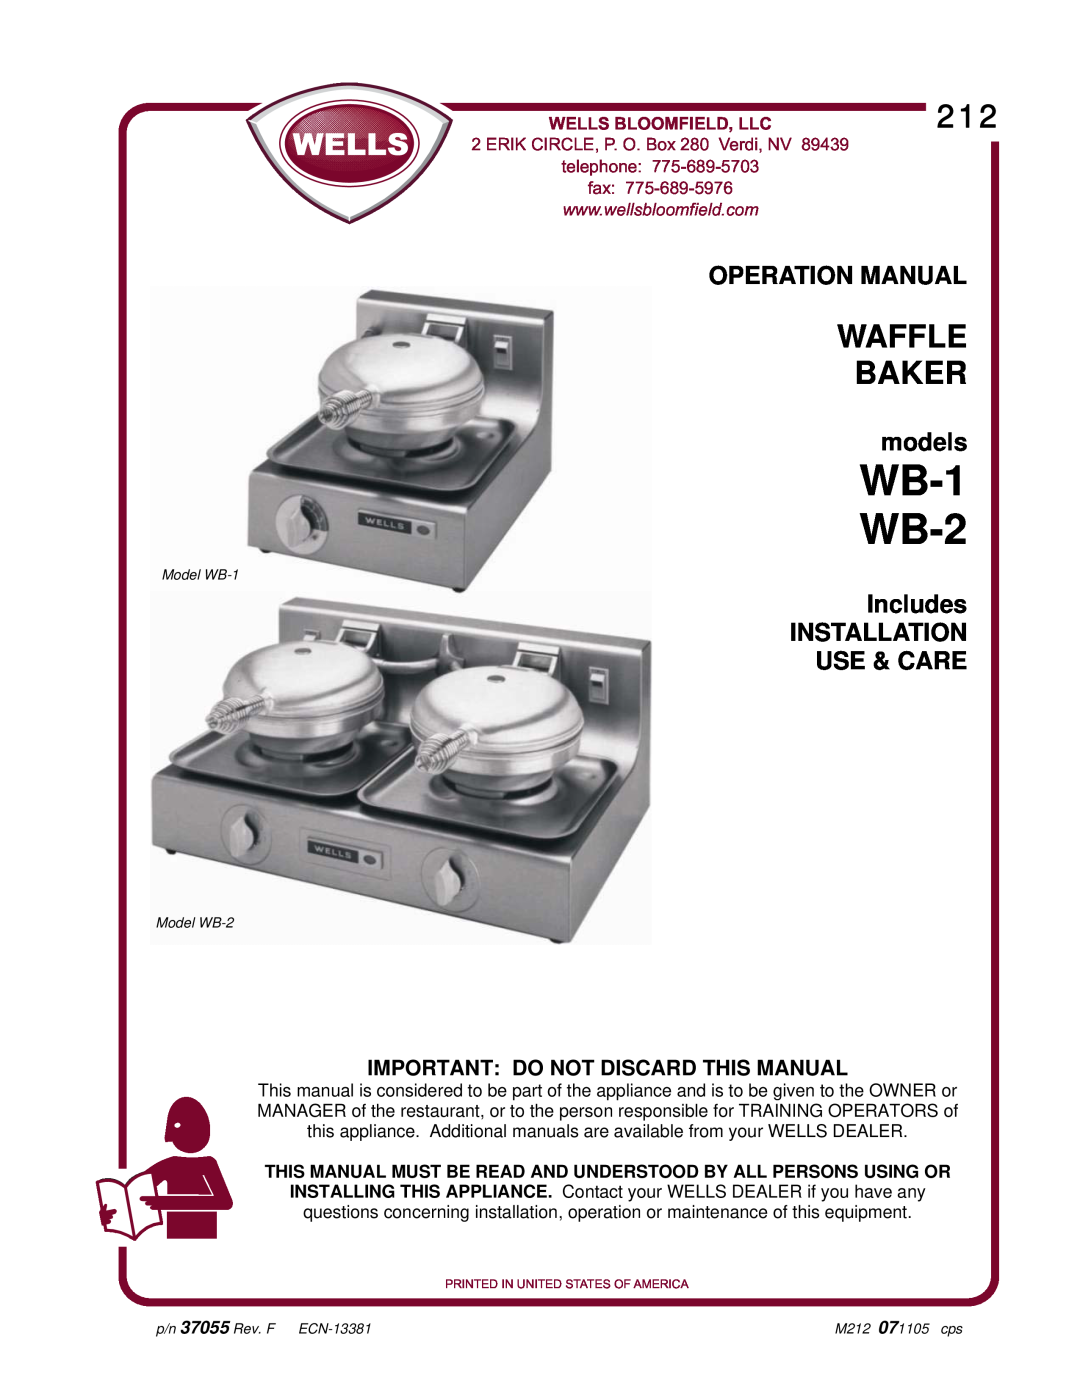 Wells operation manual Wells Bloomfield, Llc, ERIK CIRCLE, P. O. Box 280 Verdi, NV telephone, fax, WB-1 WB-2, models 